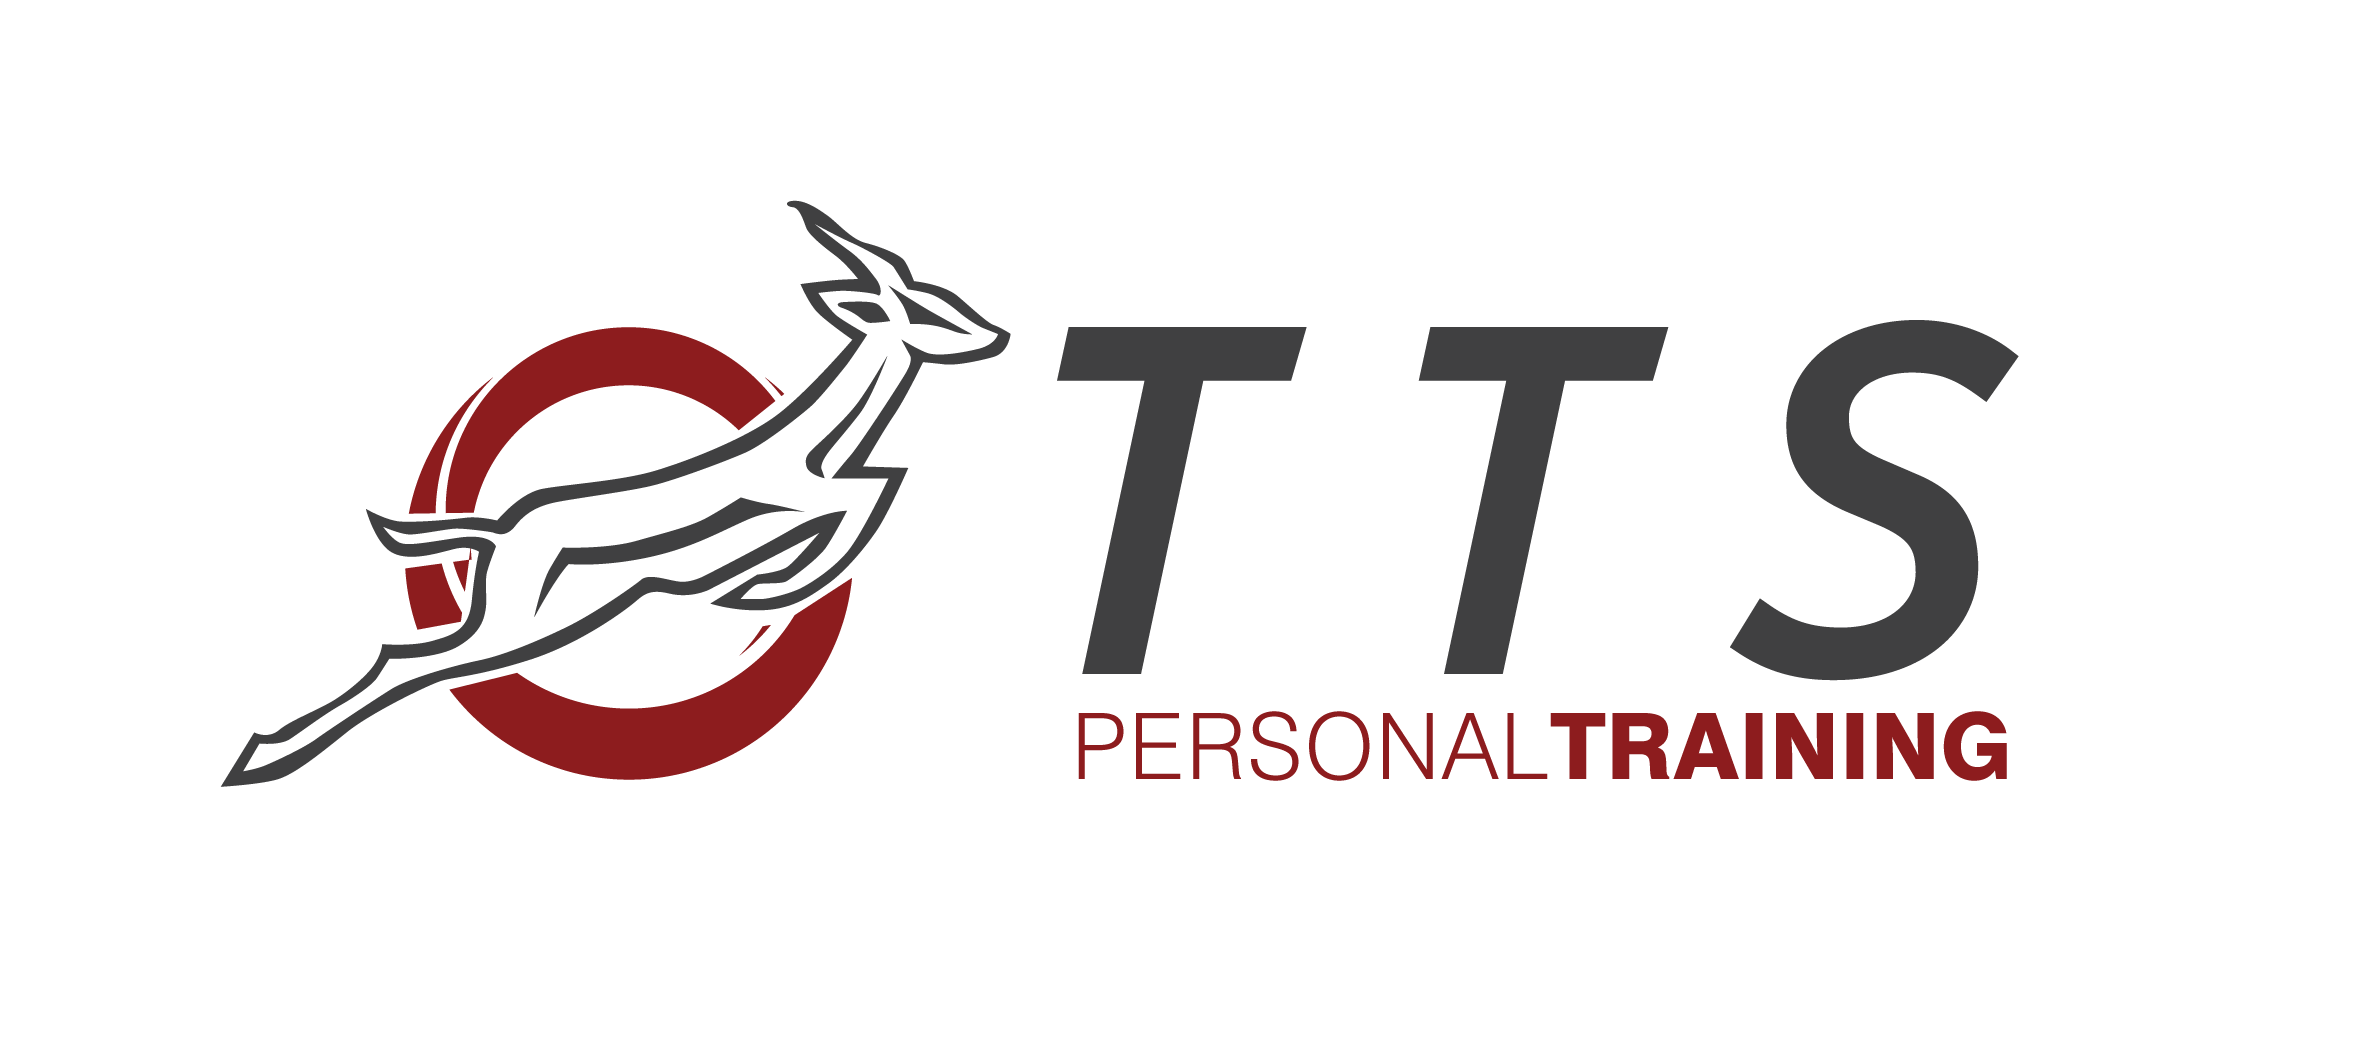 TTS Personal Training logo